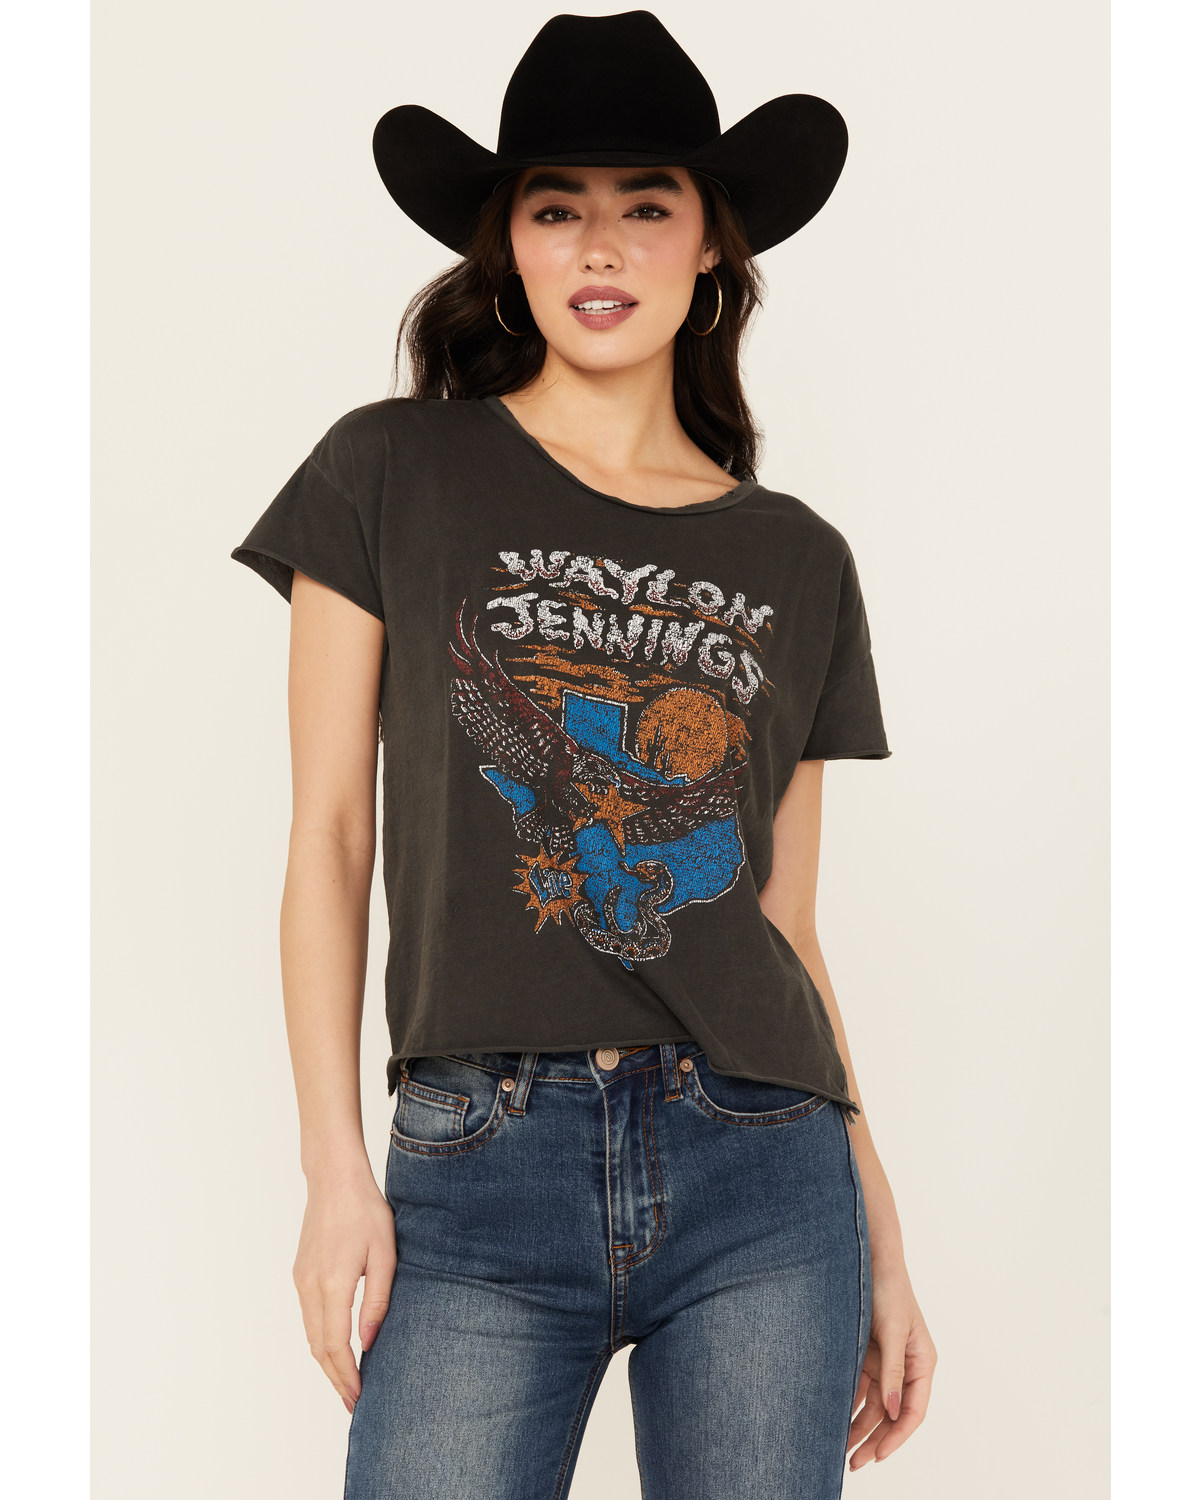 Bandit Women's Waylon Jennings Short Sleeve Graphic Tee